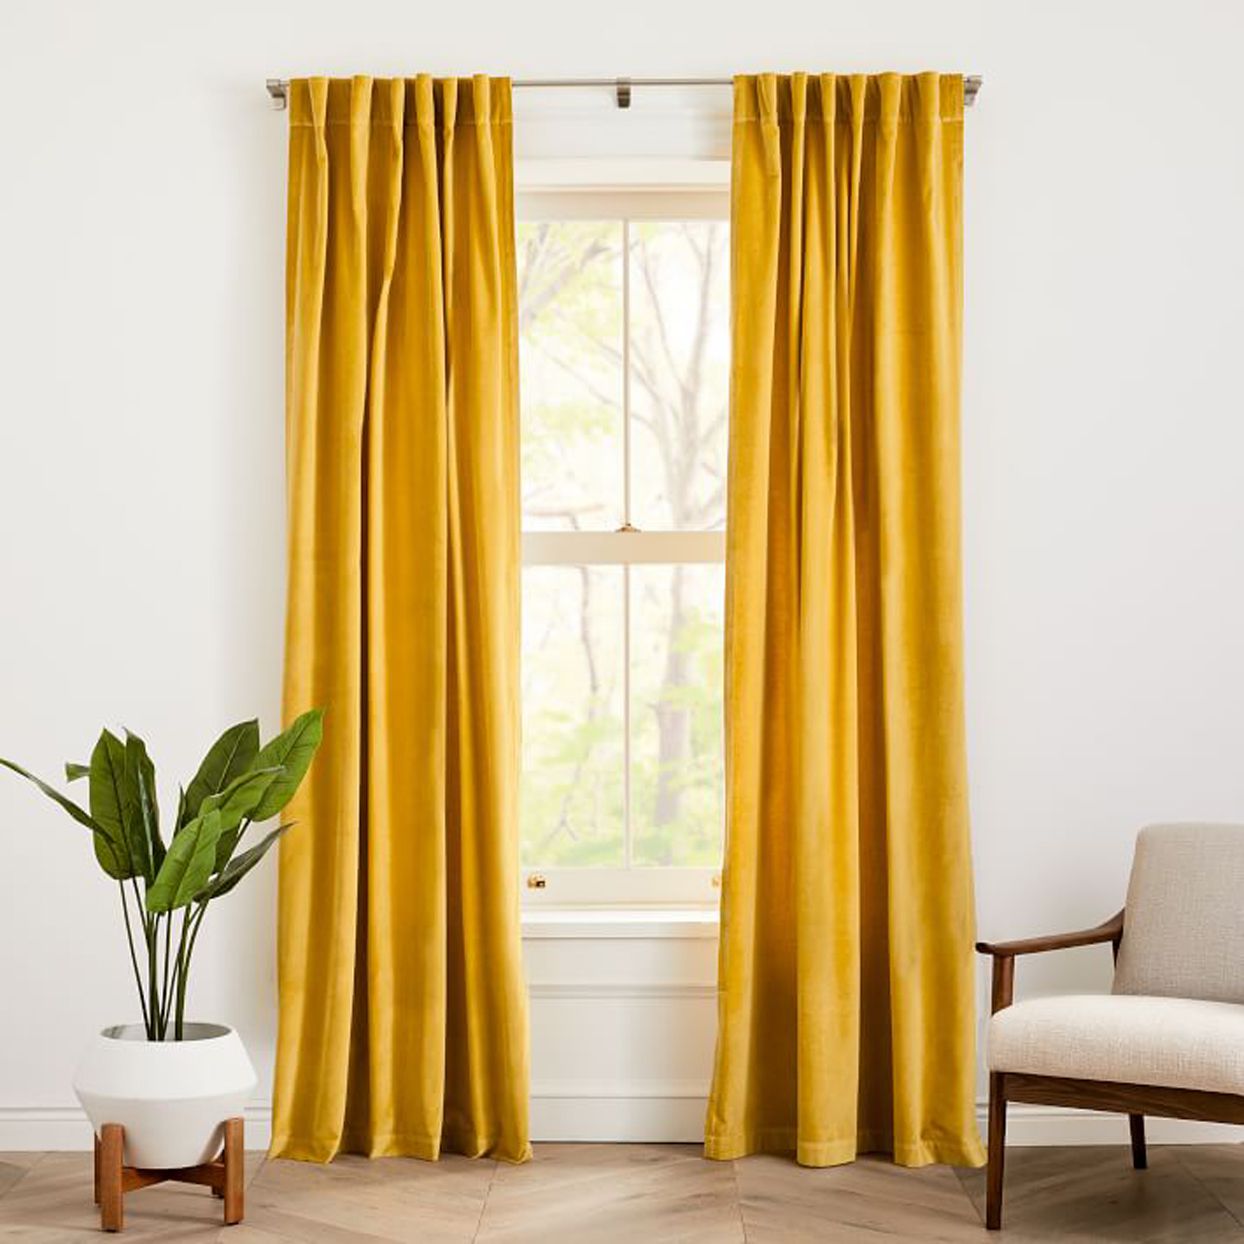 The Best Living Room Curtain Ideas, Orange Curtains Living Room Ideas